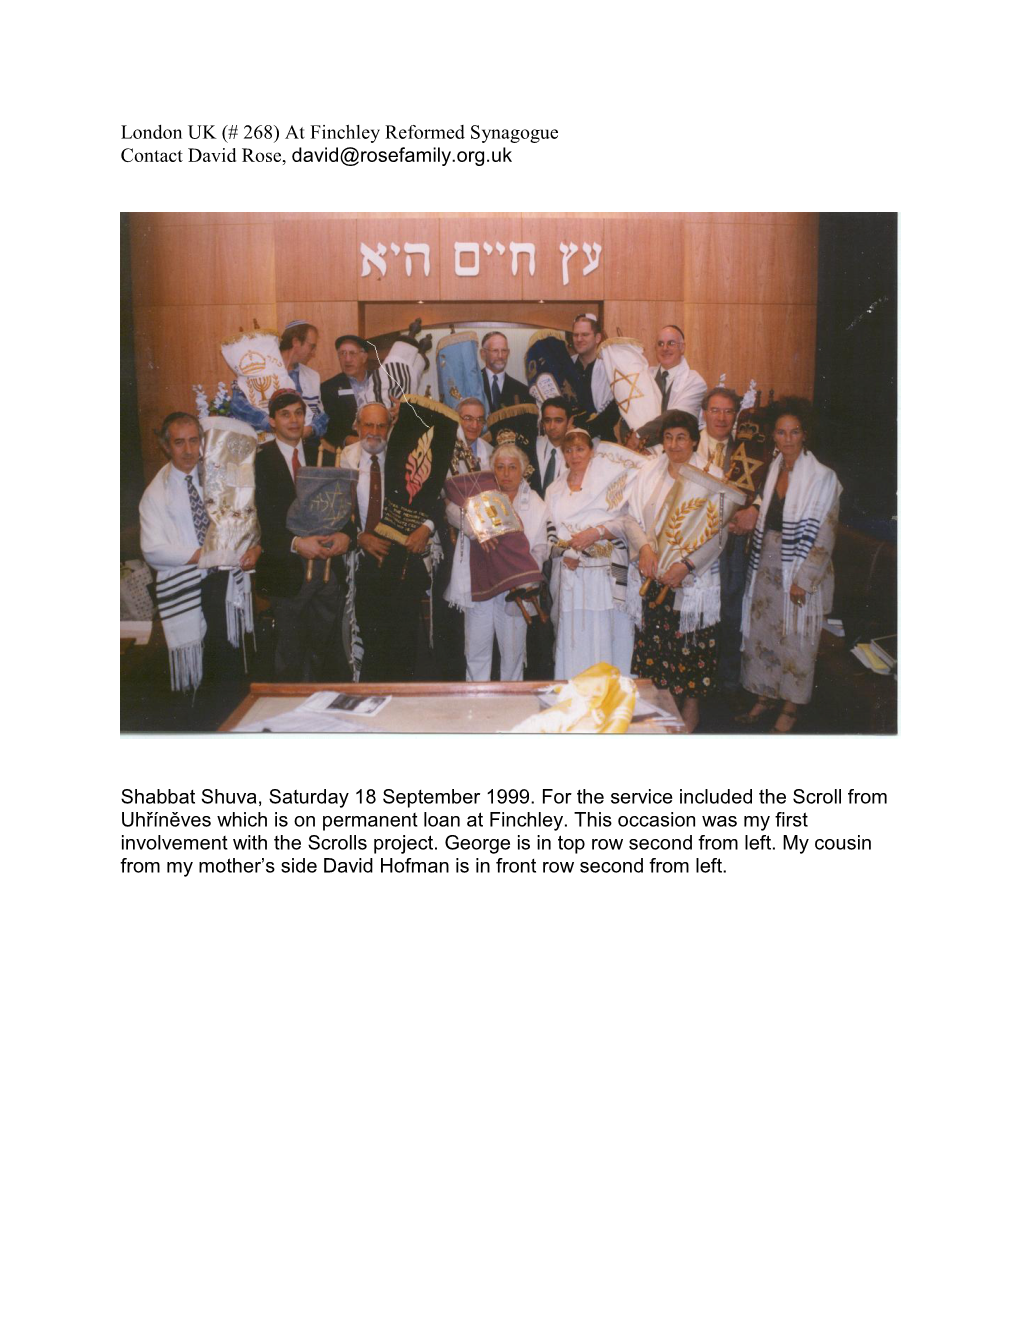 London UK (# 268) at Finchley Reformed Synagogue Contact David Rose, David@Rosefamily.Org.Uk Shabbat Shuva, Saturday 18 Septembe